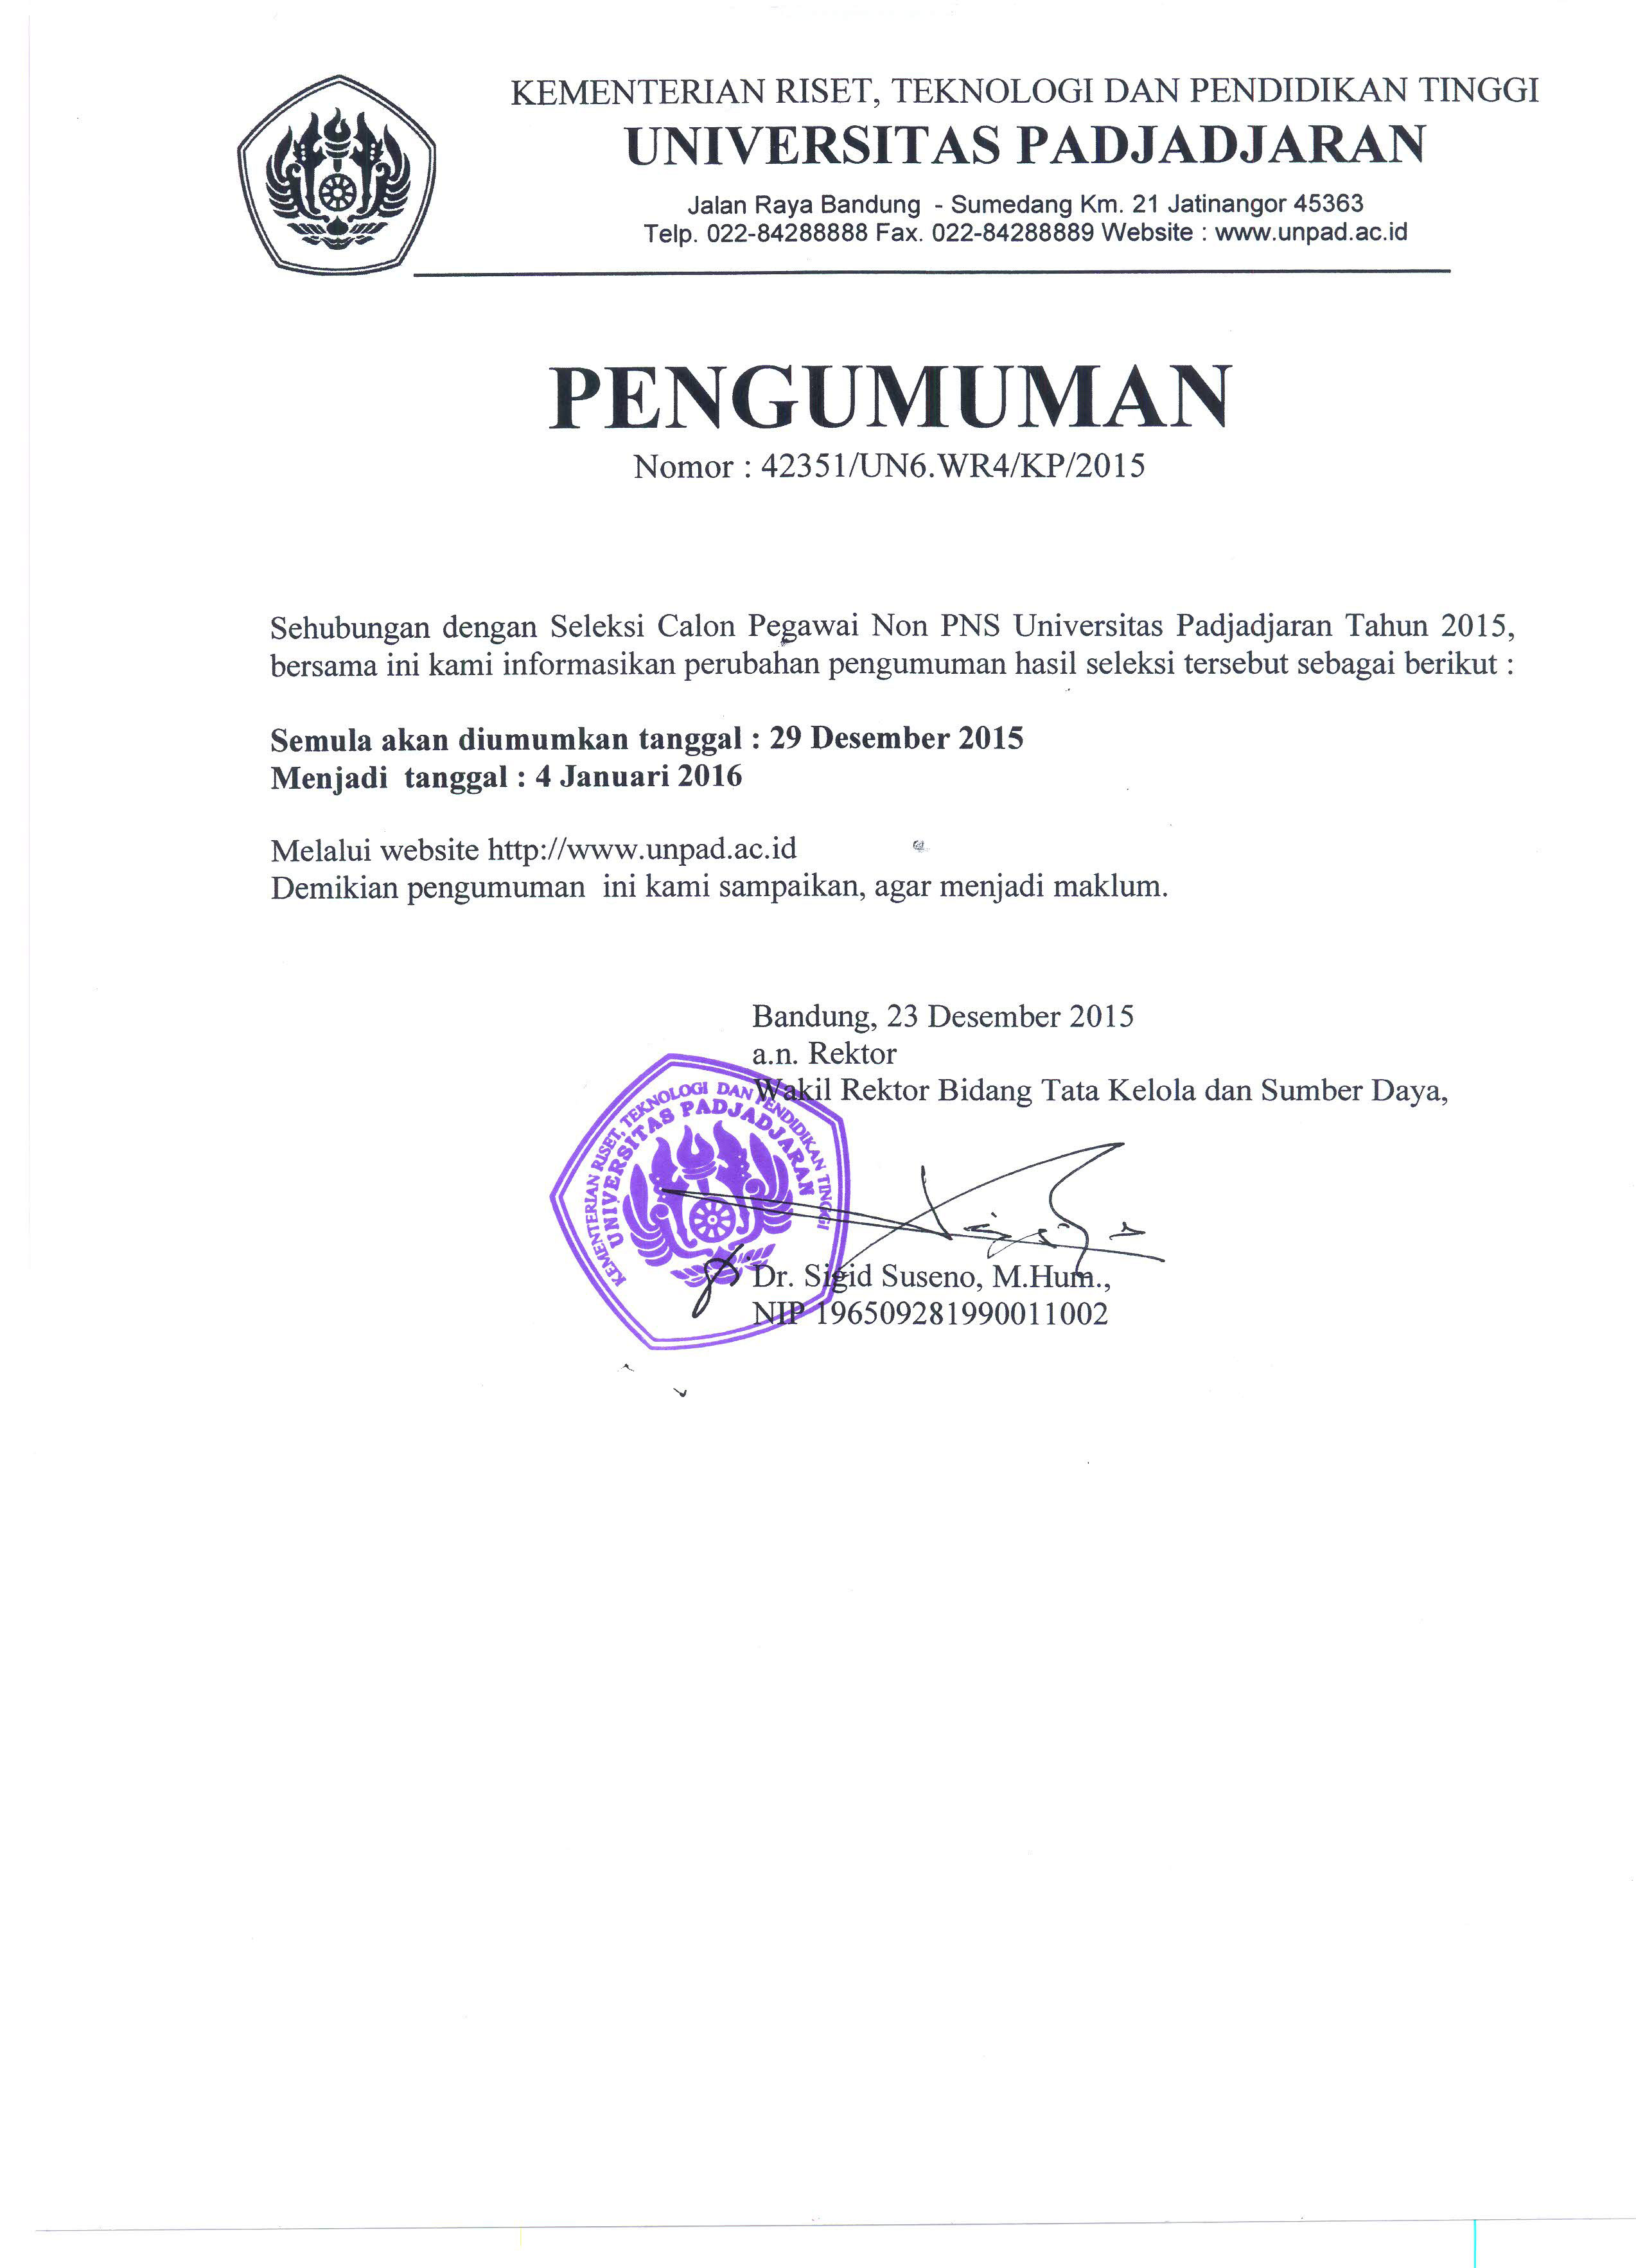 Jadwal Pengumuman Hasil Seleksi Calon Pegawai Non Pns Unpad Universitas Padjadjaran